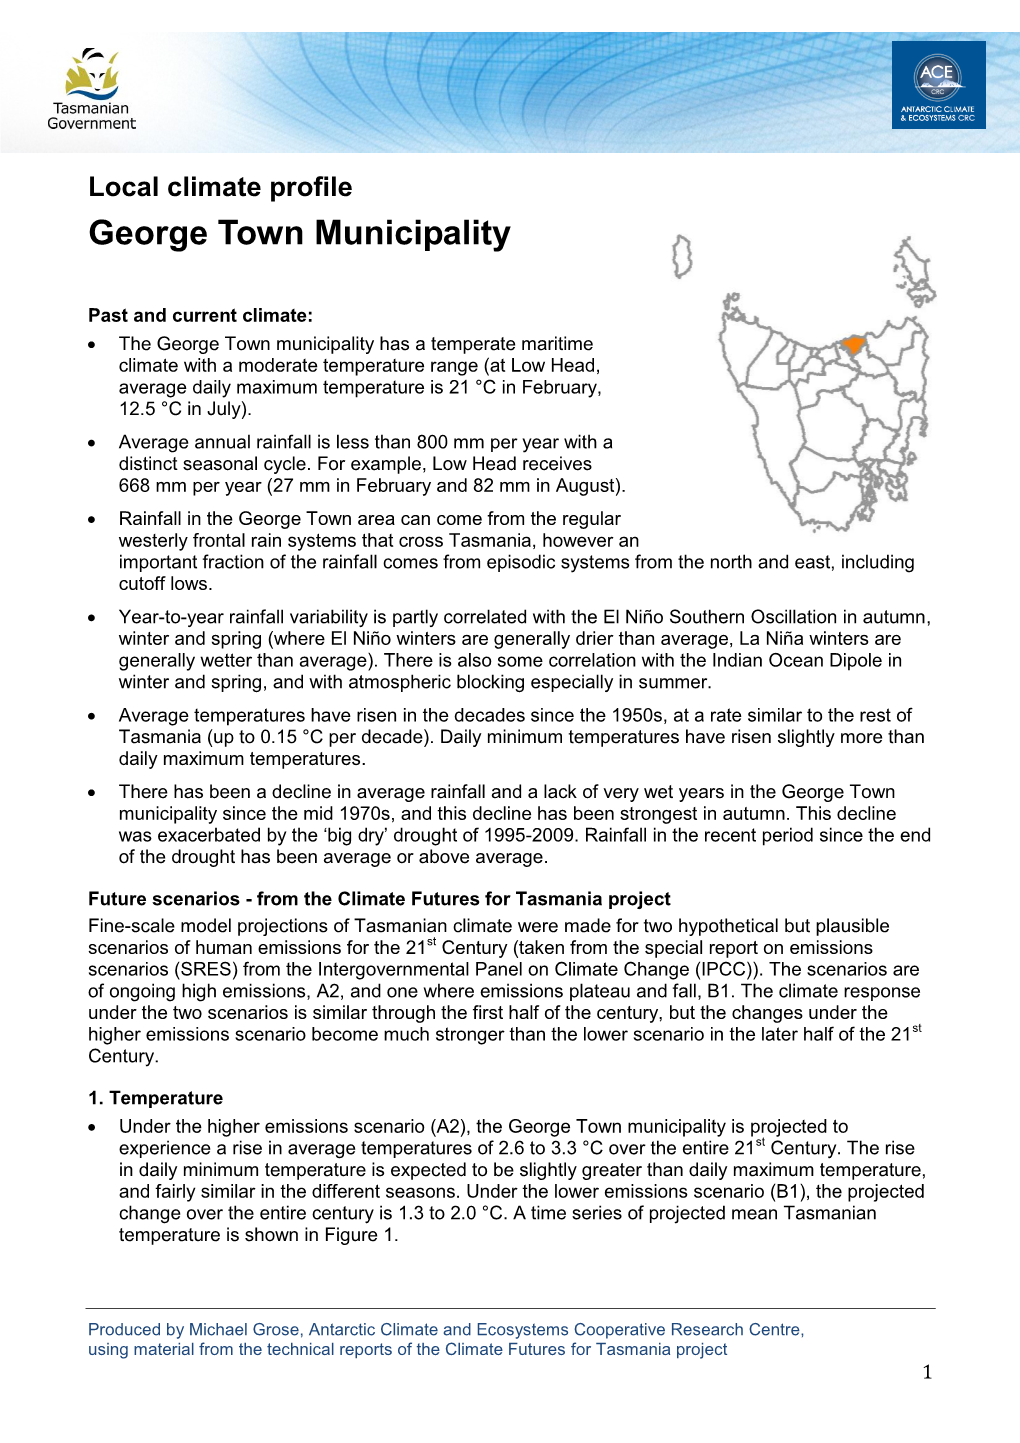 George Town Municipality